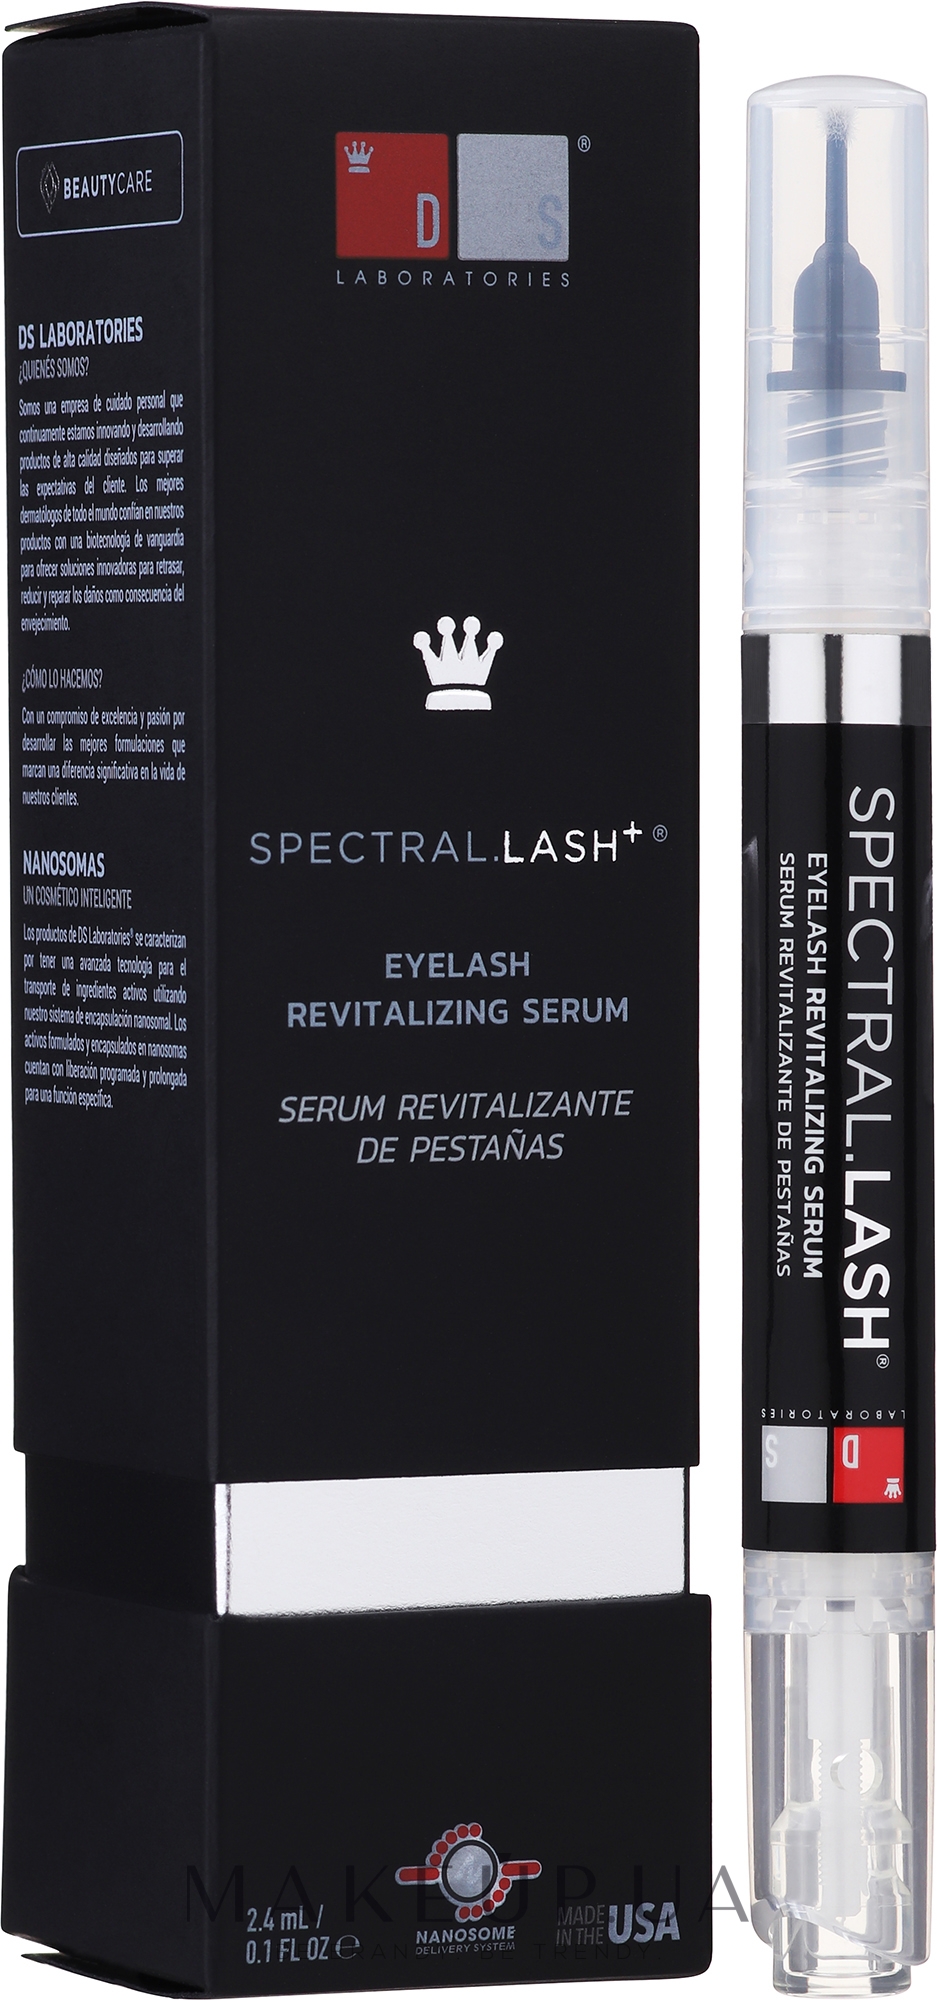 Сыворотка для роста ресниц - DS Laboratories Spectral.LASH Eyelash Growth Serum — фото 2.4ml